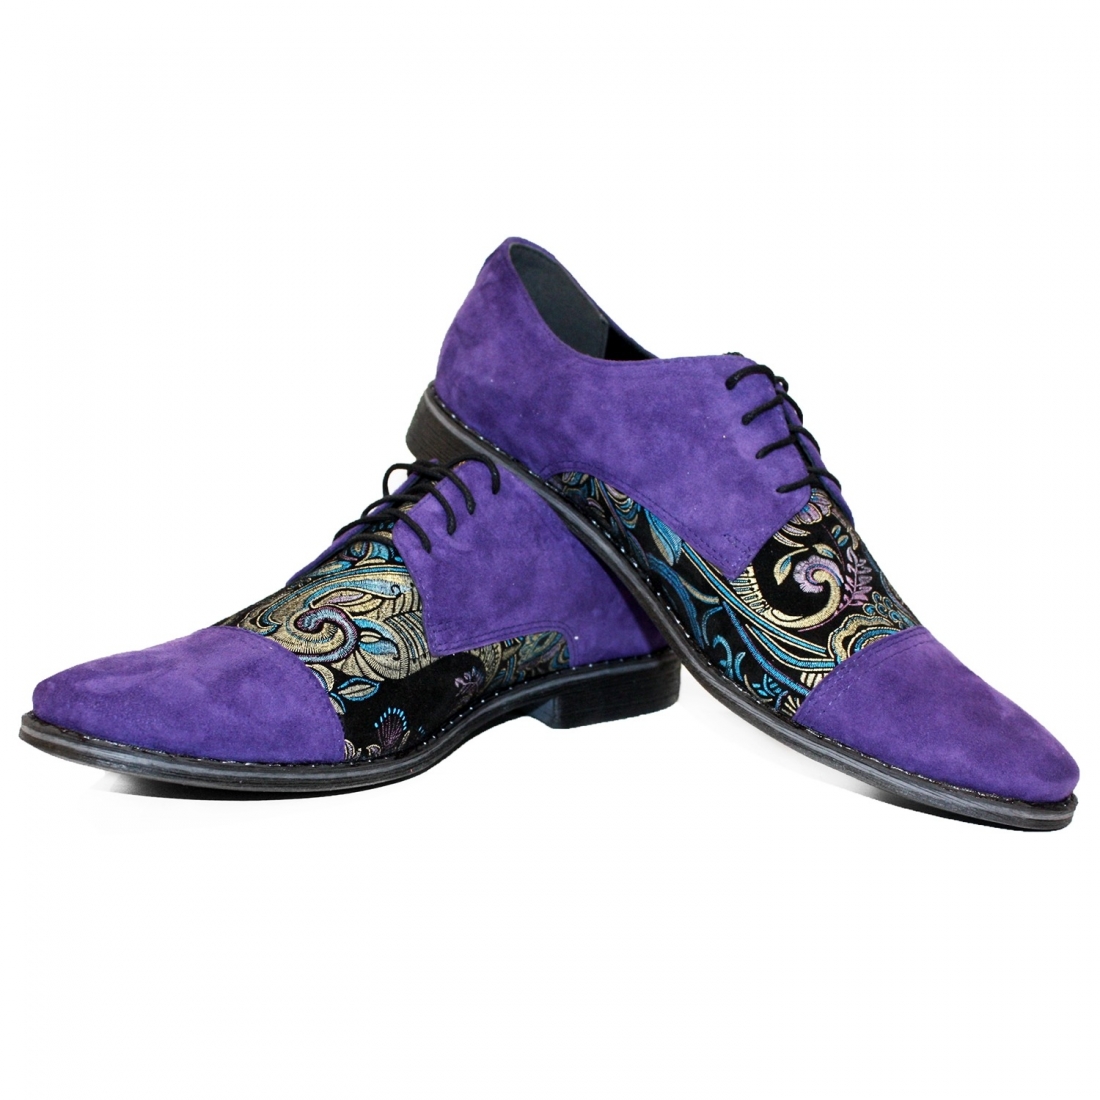 Modello Fioletto - Chaussure Classique - Handmade Colorful Italian Leather Shoes